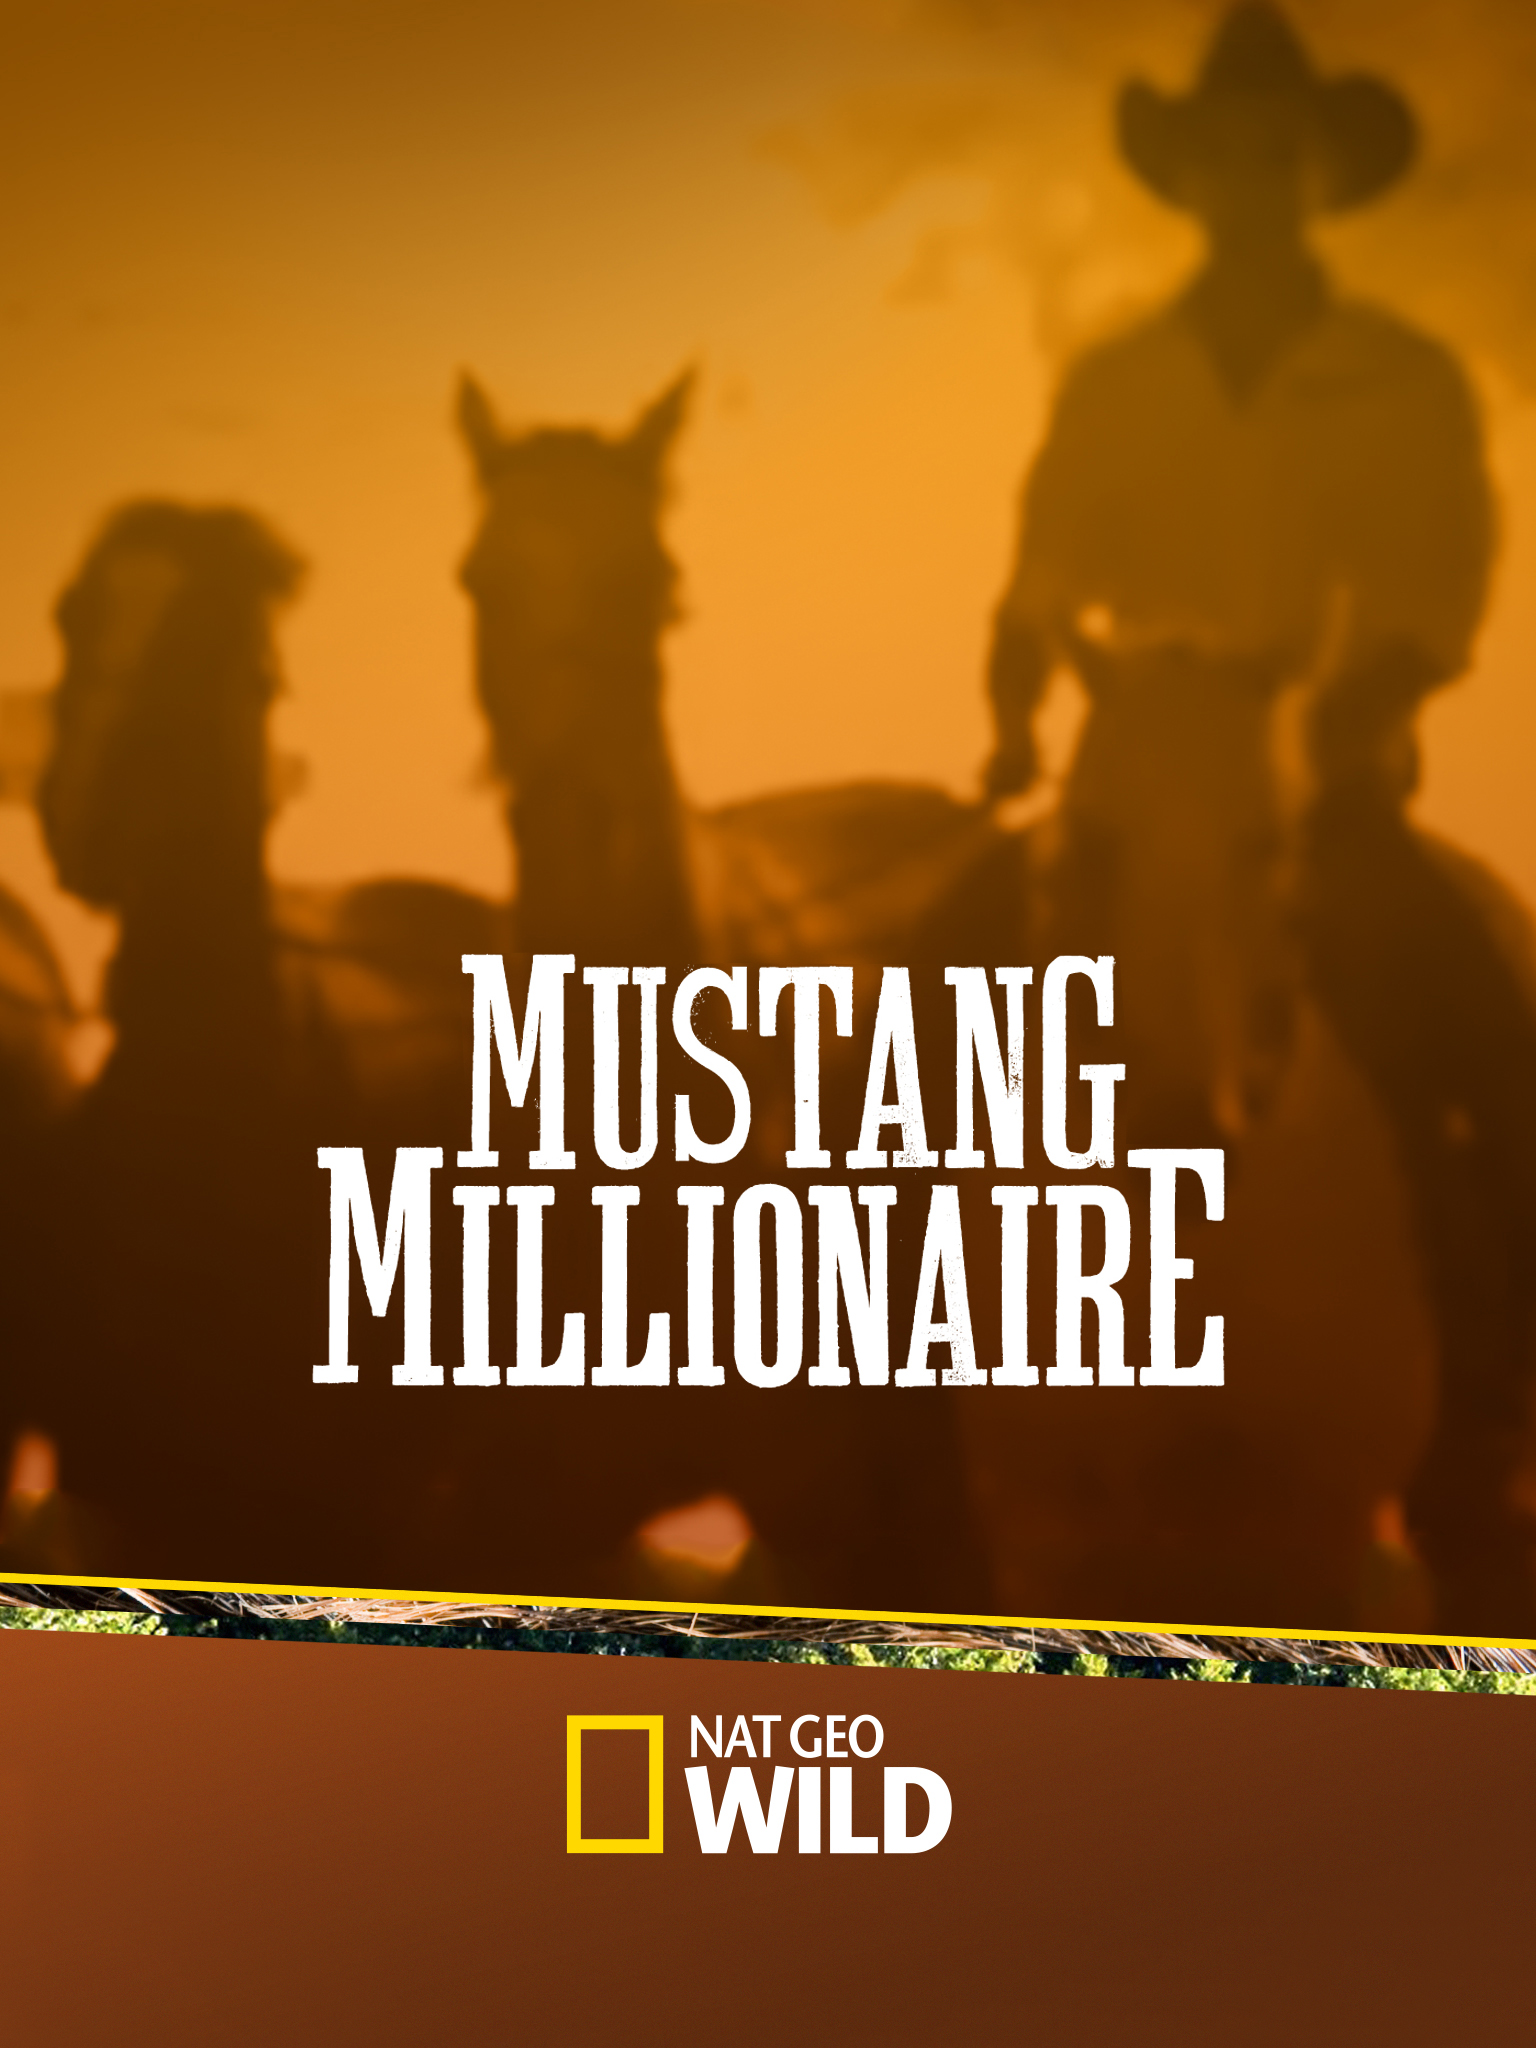 Mustang Millionaire